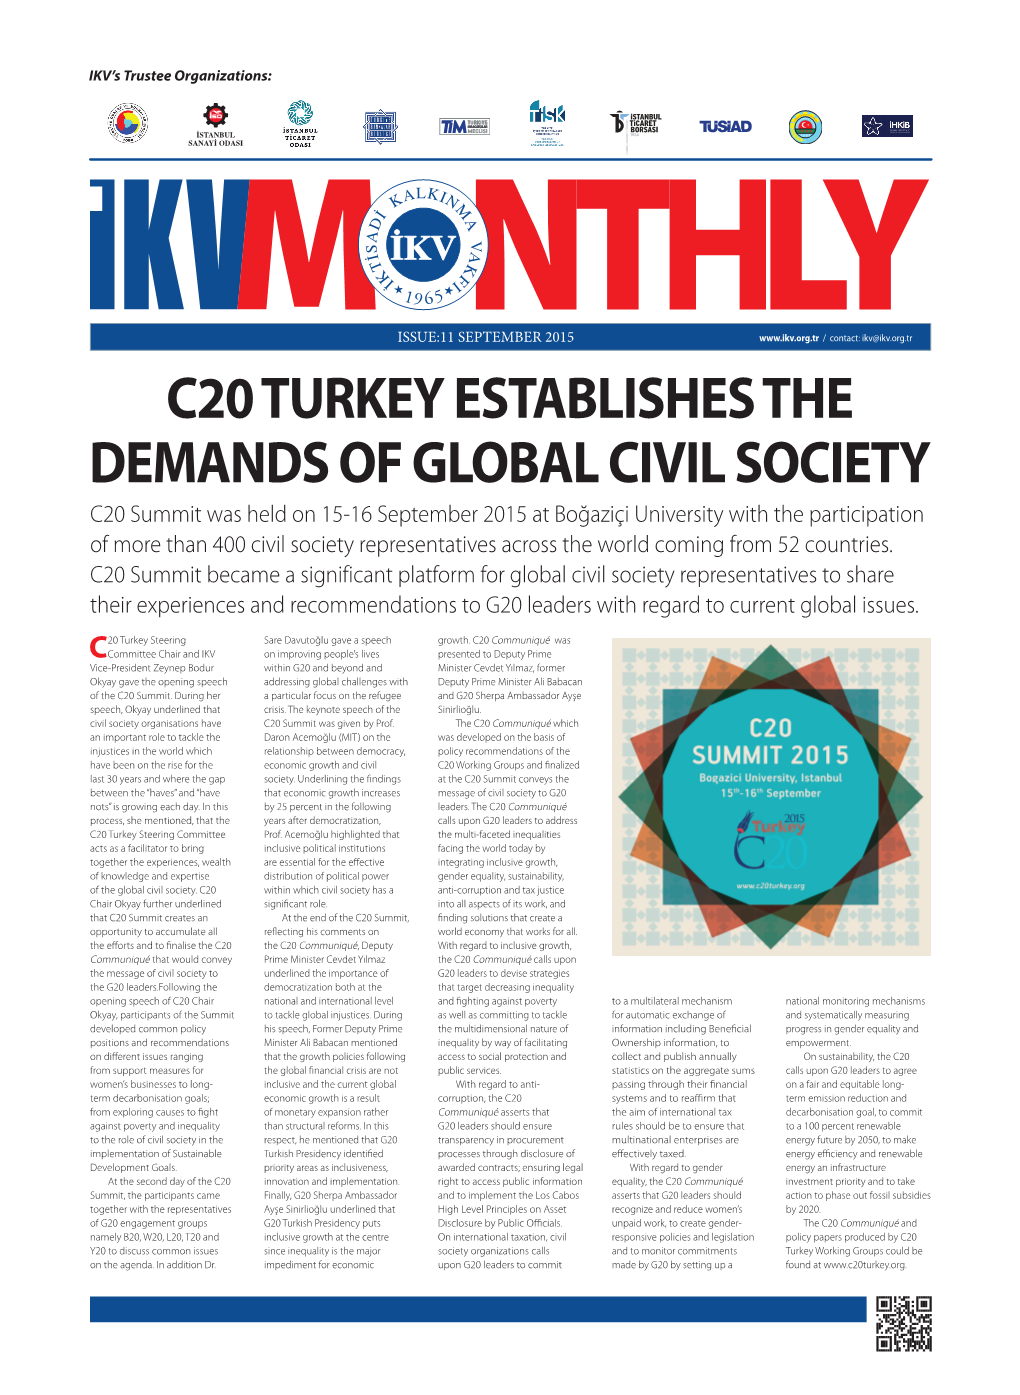 C20 Turkey Establishes the Demands of Global Civil